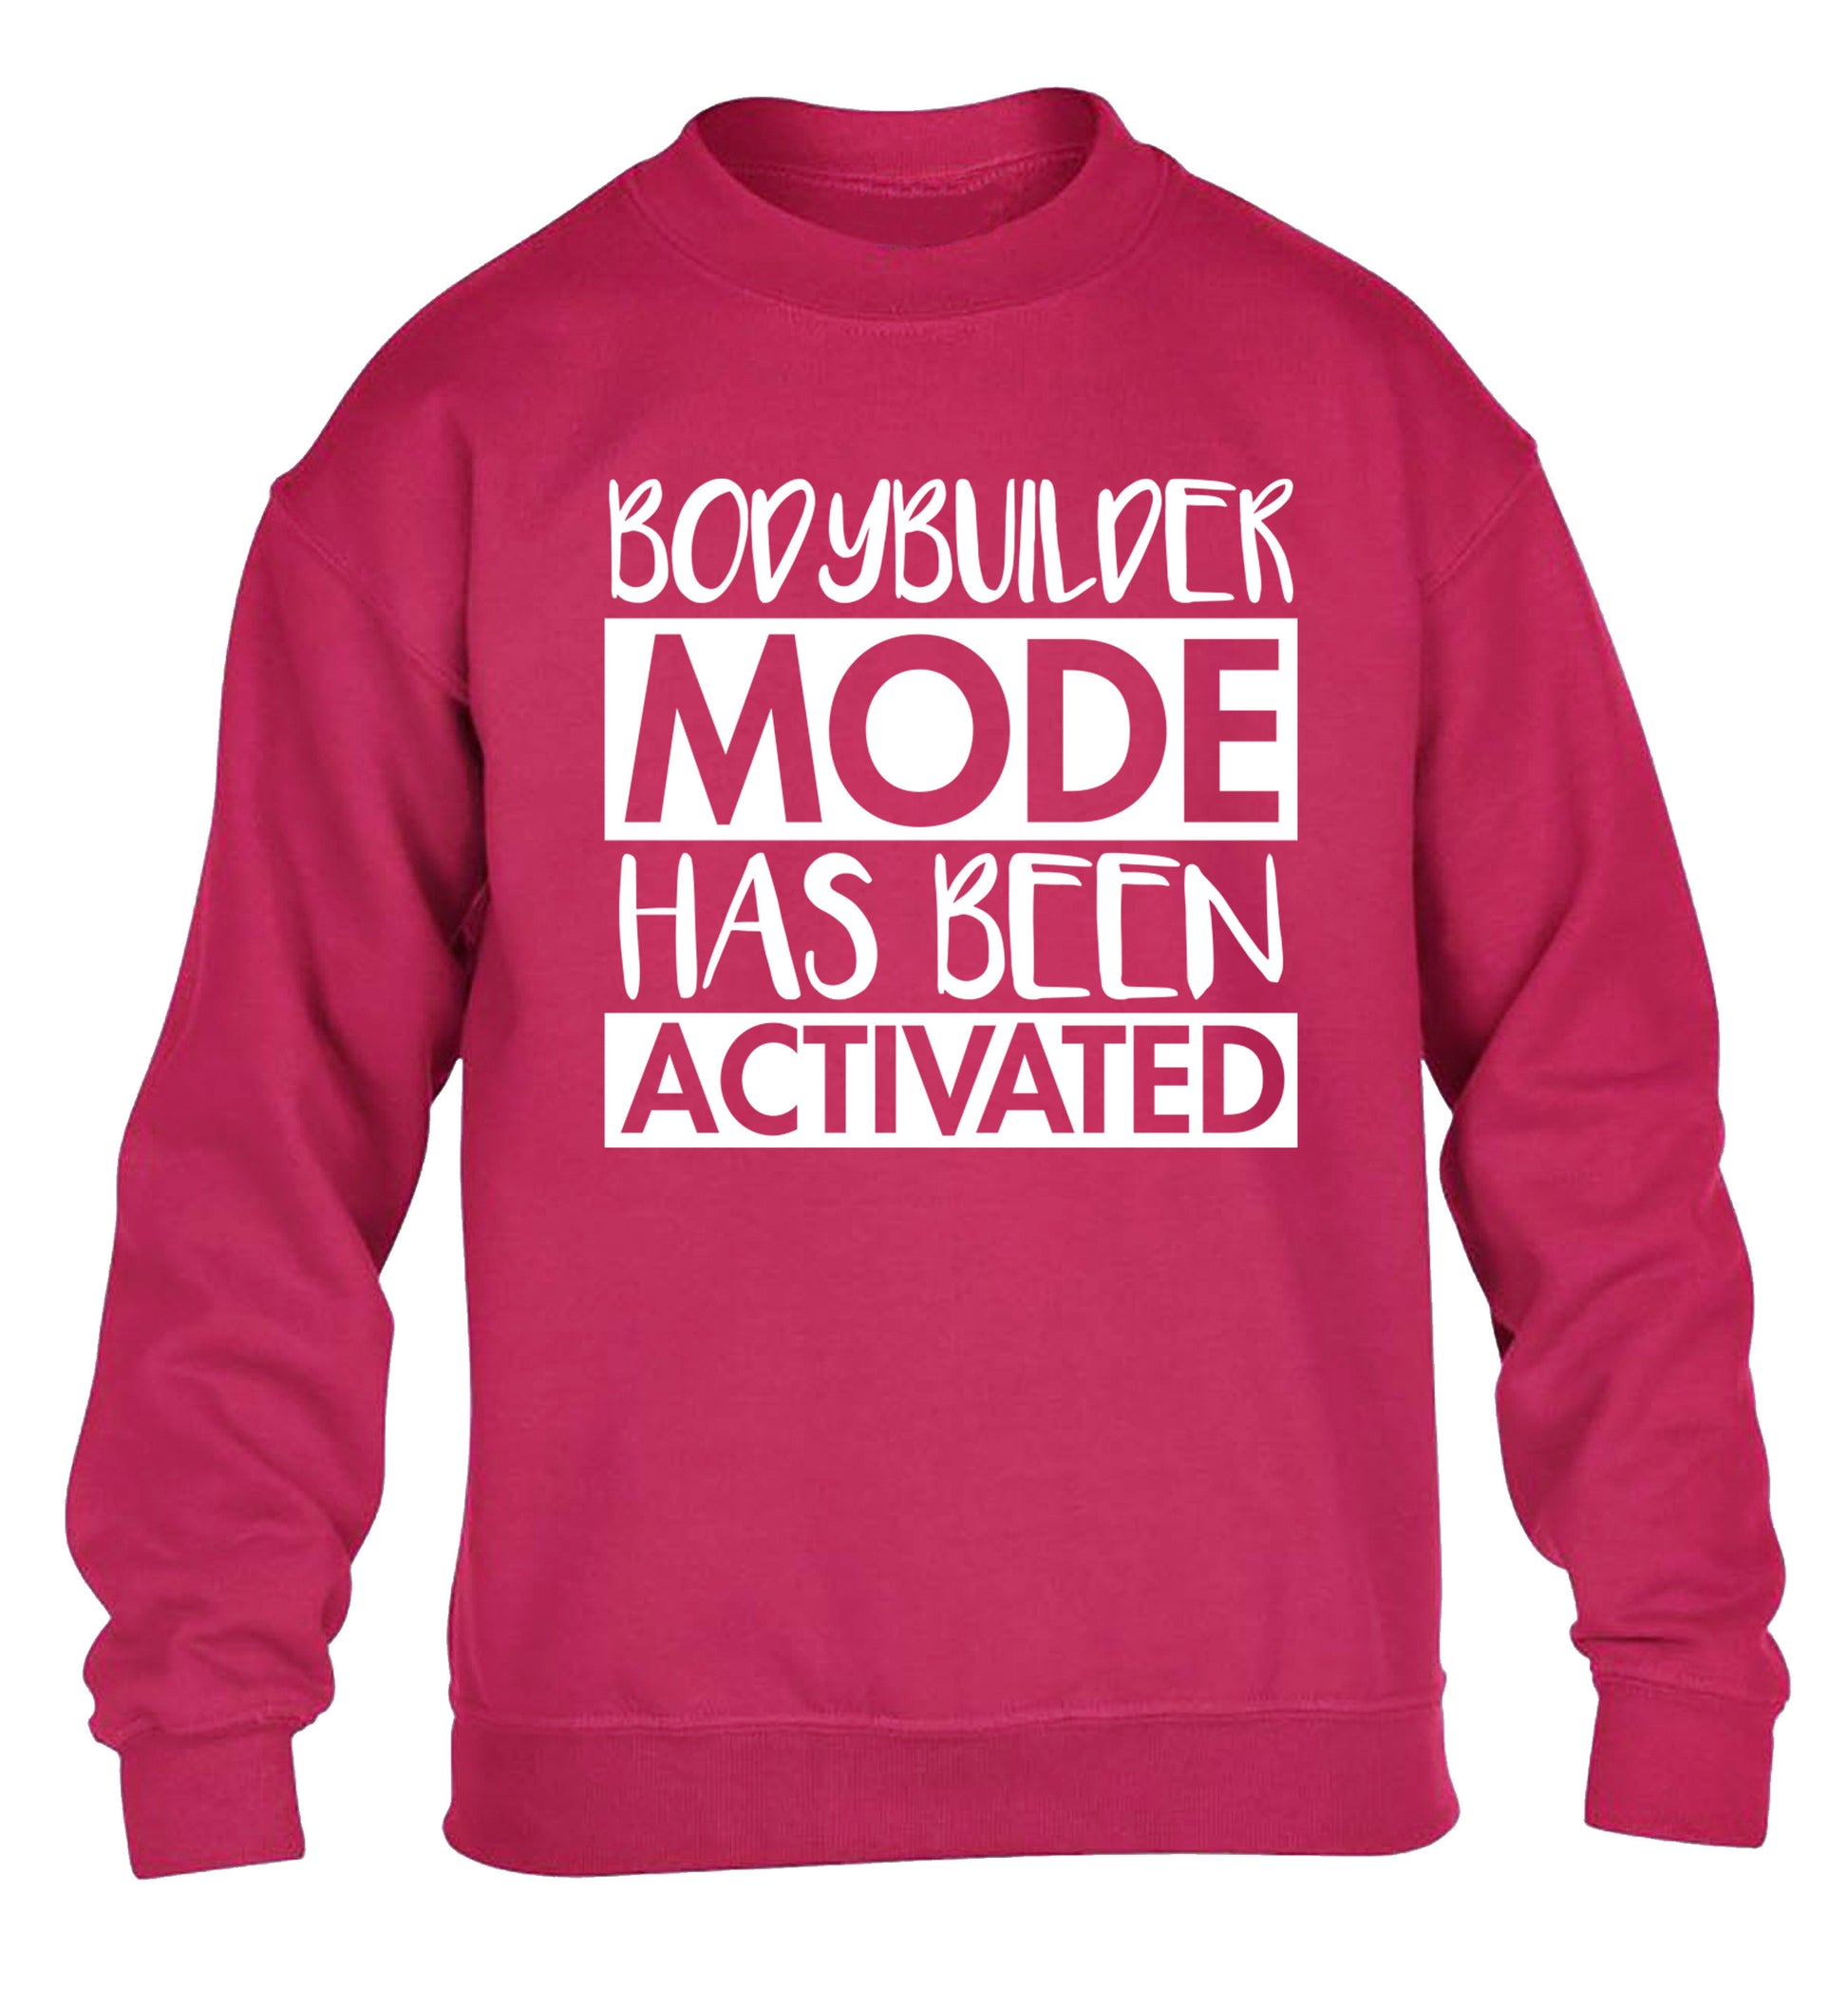 Bodybuilder mode activated children's pink sweater 12-14 Years